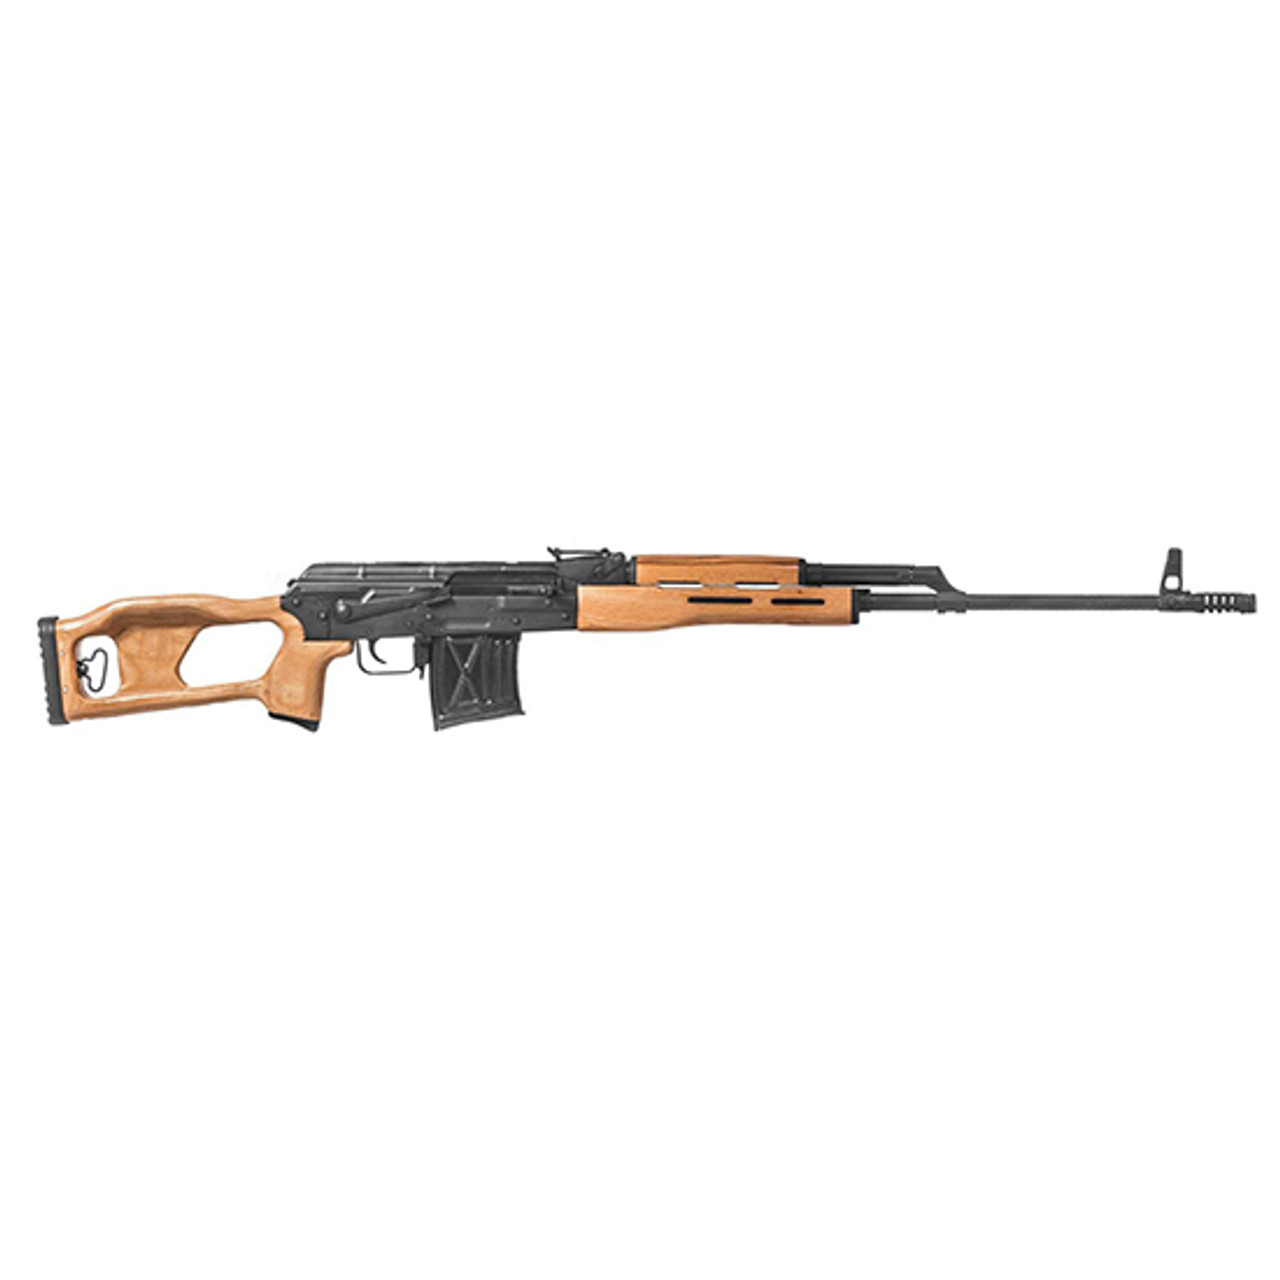 Century Arms PSL 54 CALIFORNIA LEGAL - 7.62x54R - Wood